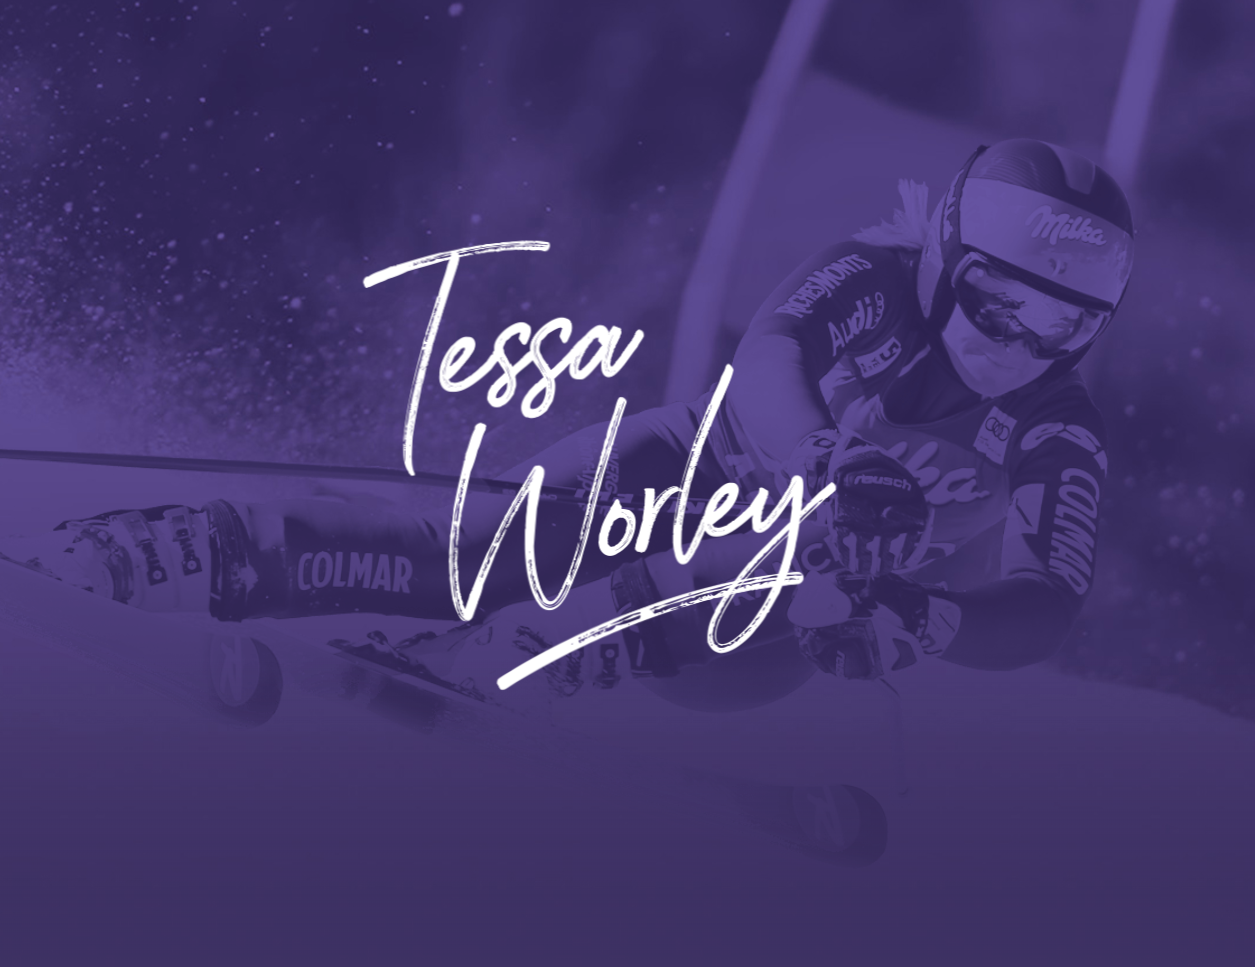 Tessa Worley, Milka girl - Site officiel